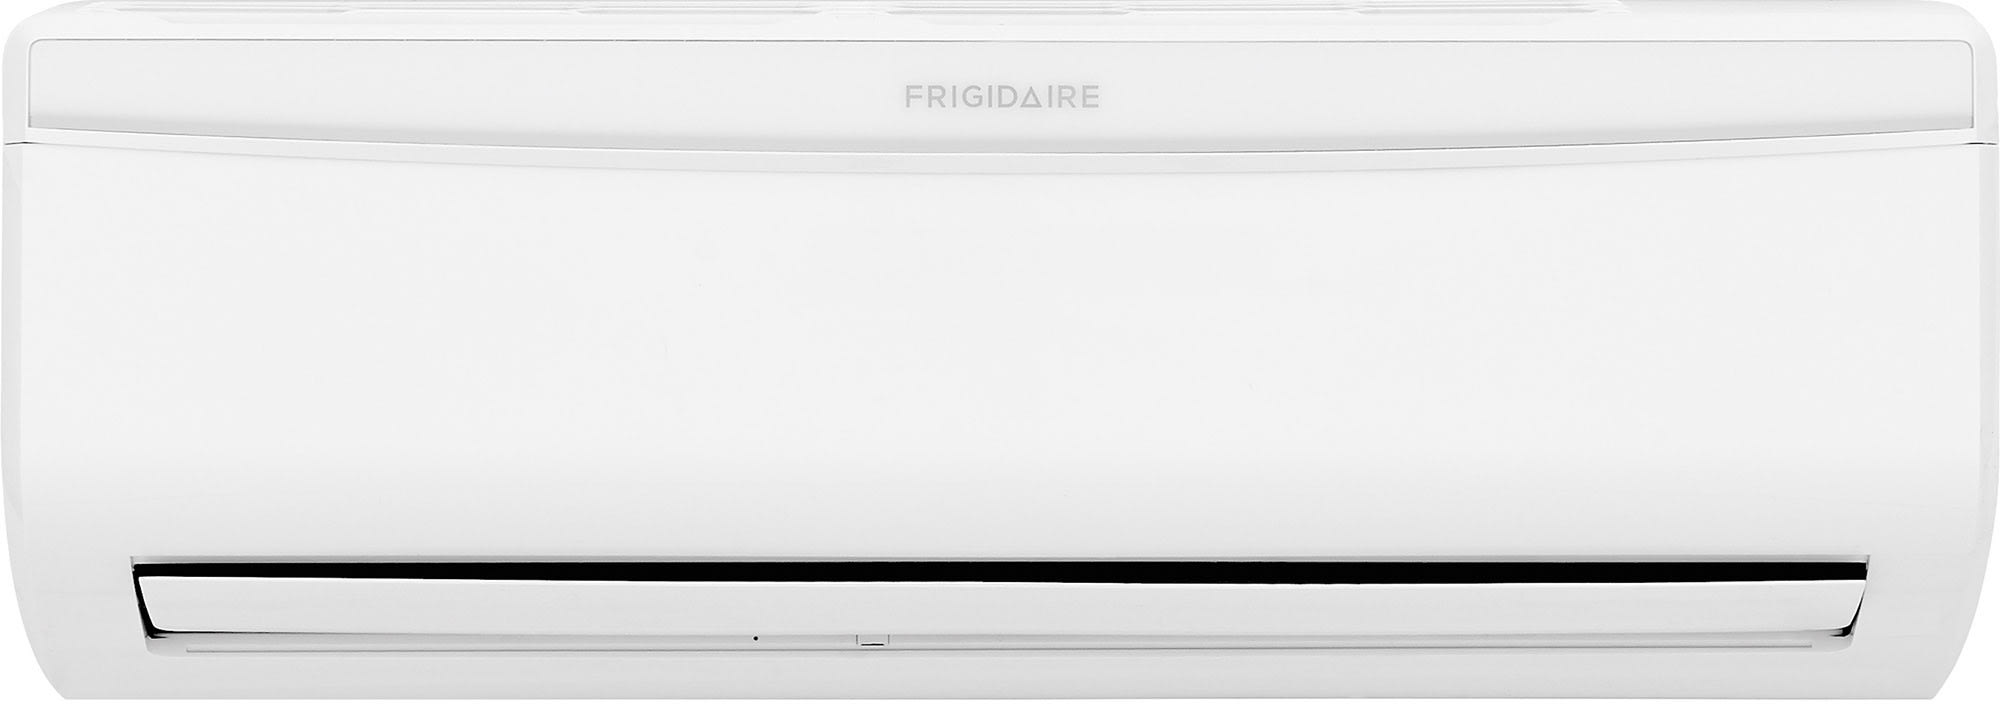 frigidaire air conditioner instructions